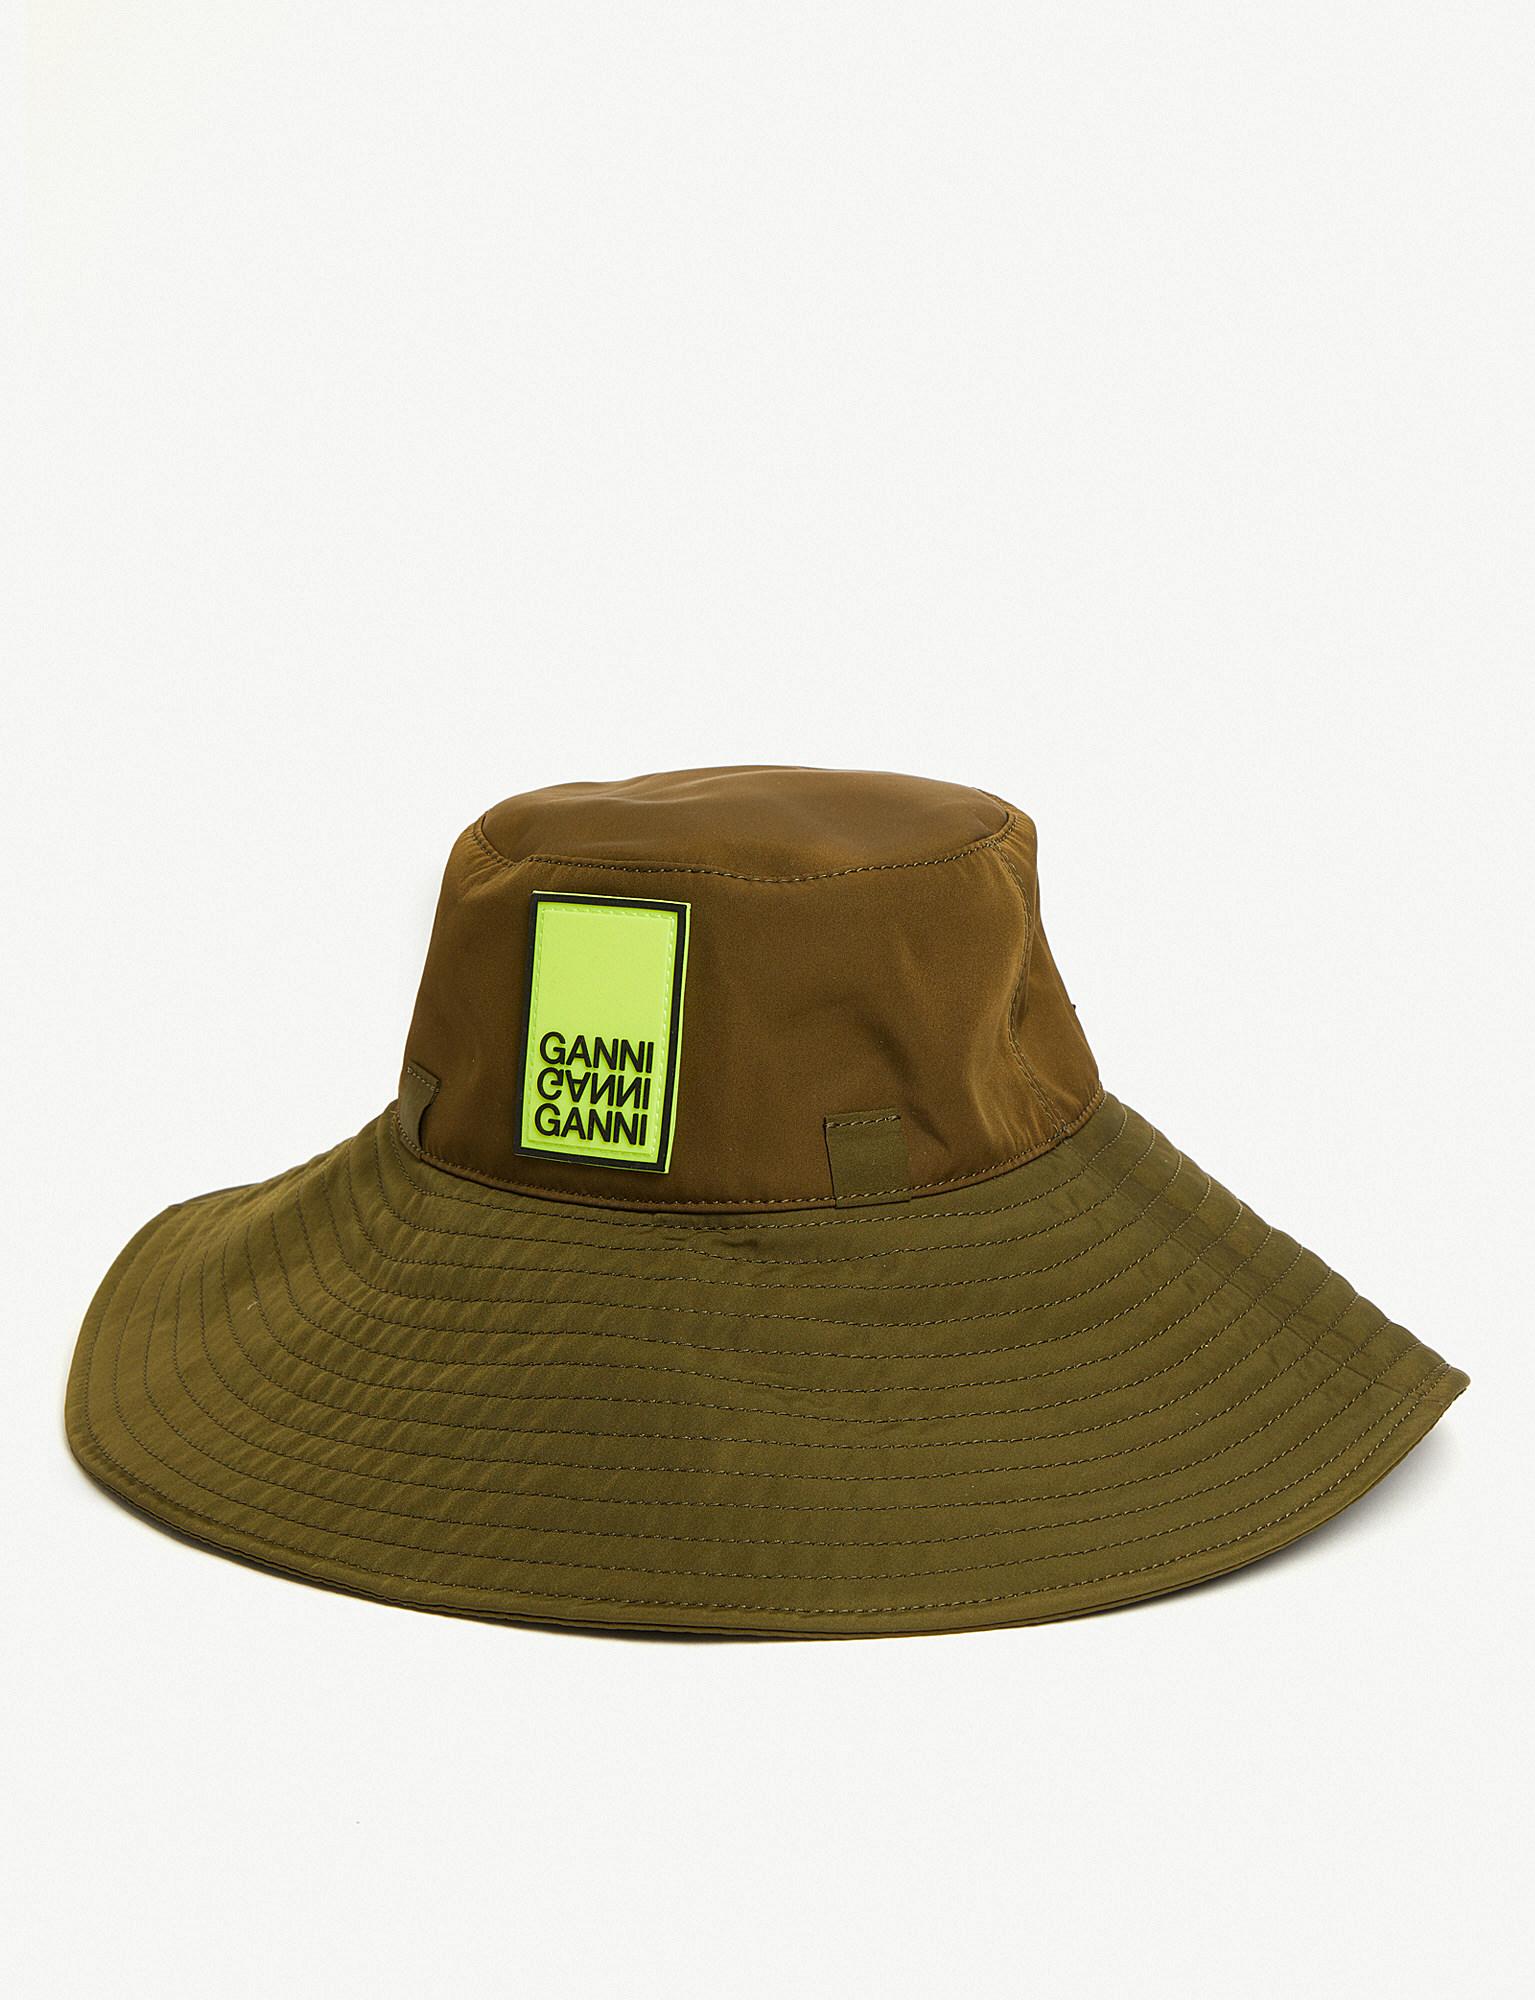 Ganni Shell Bucket Hat in Green - Lyst